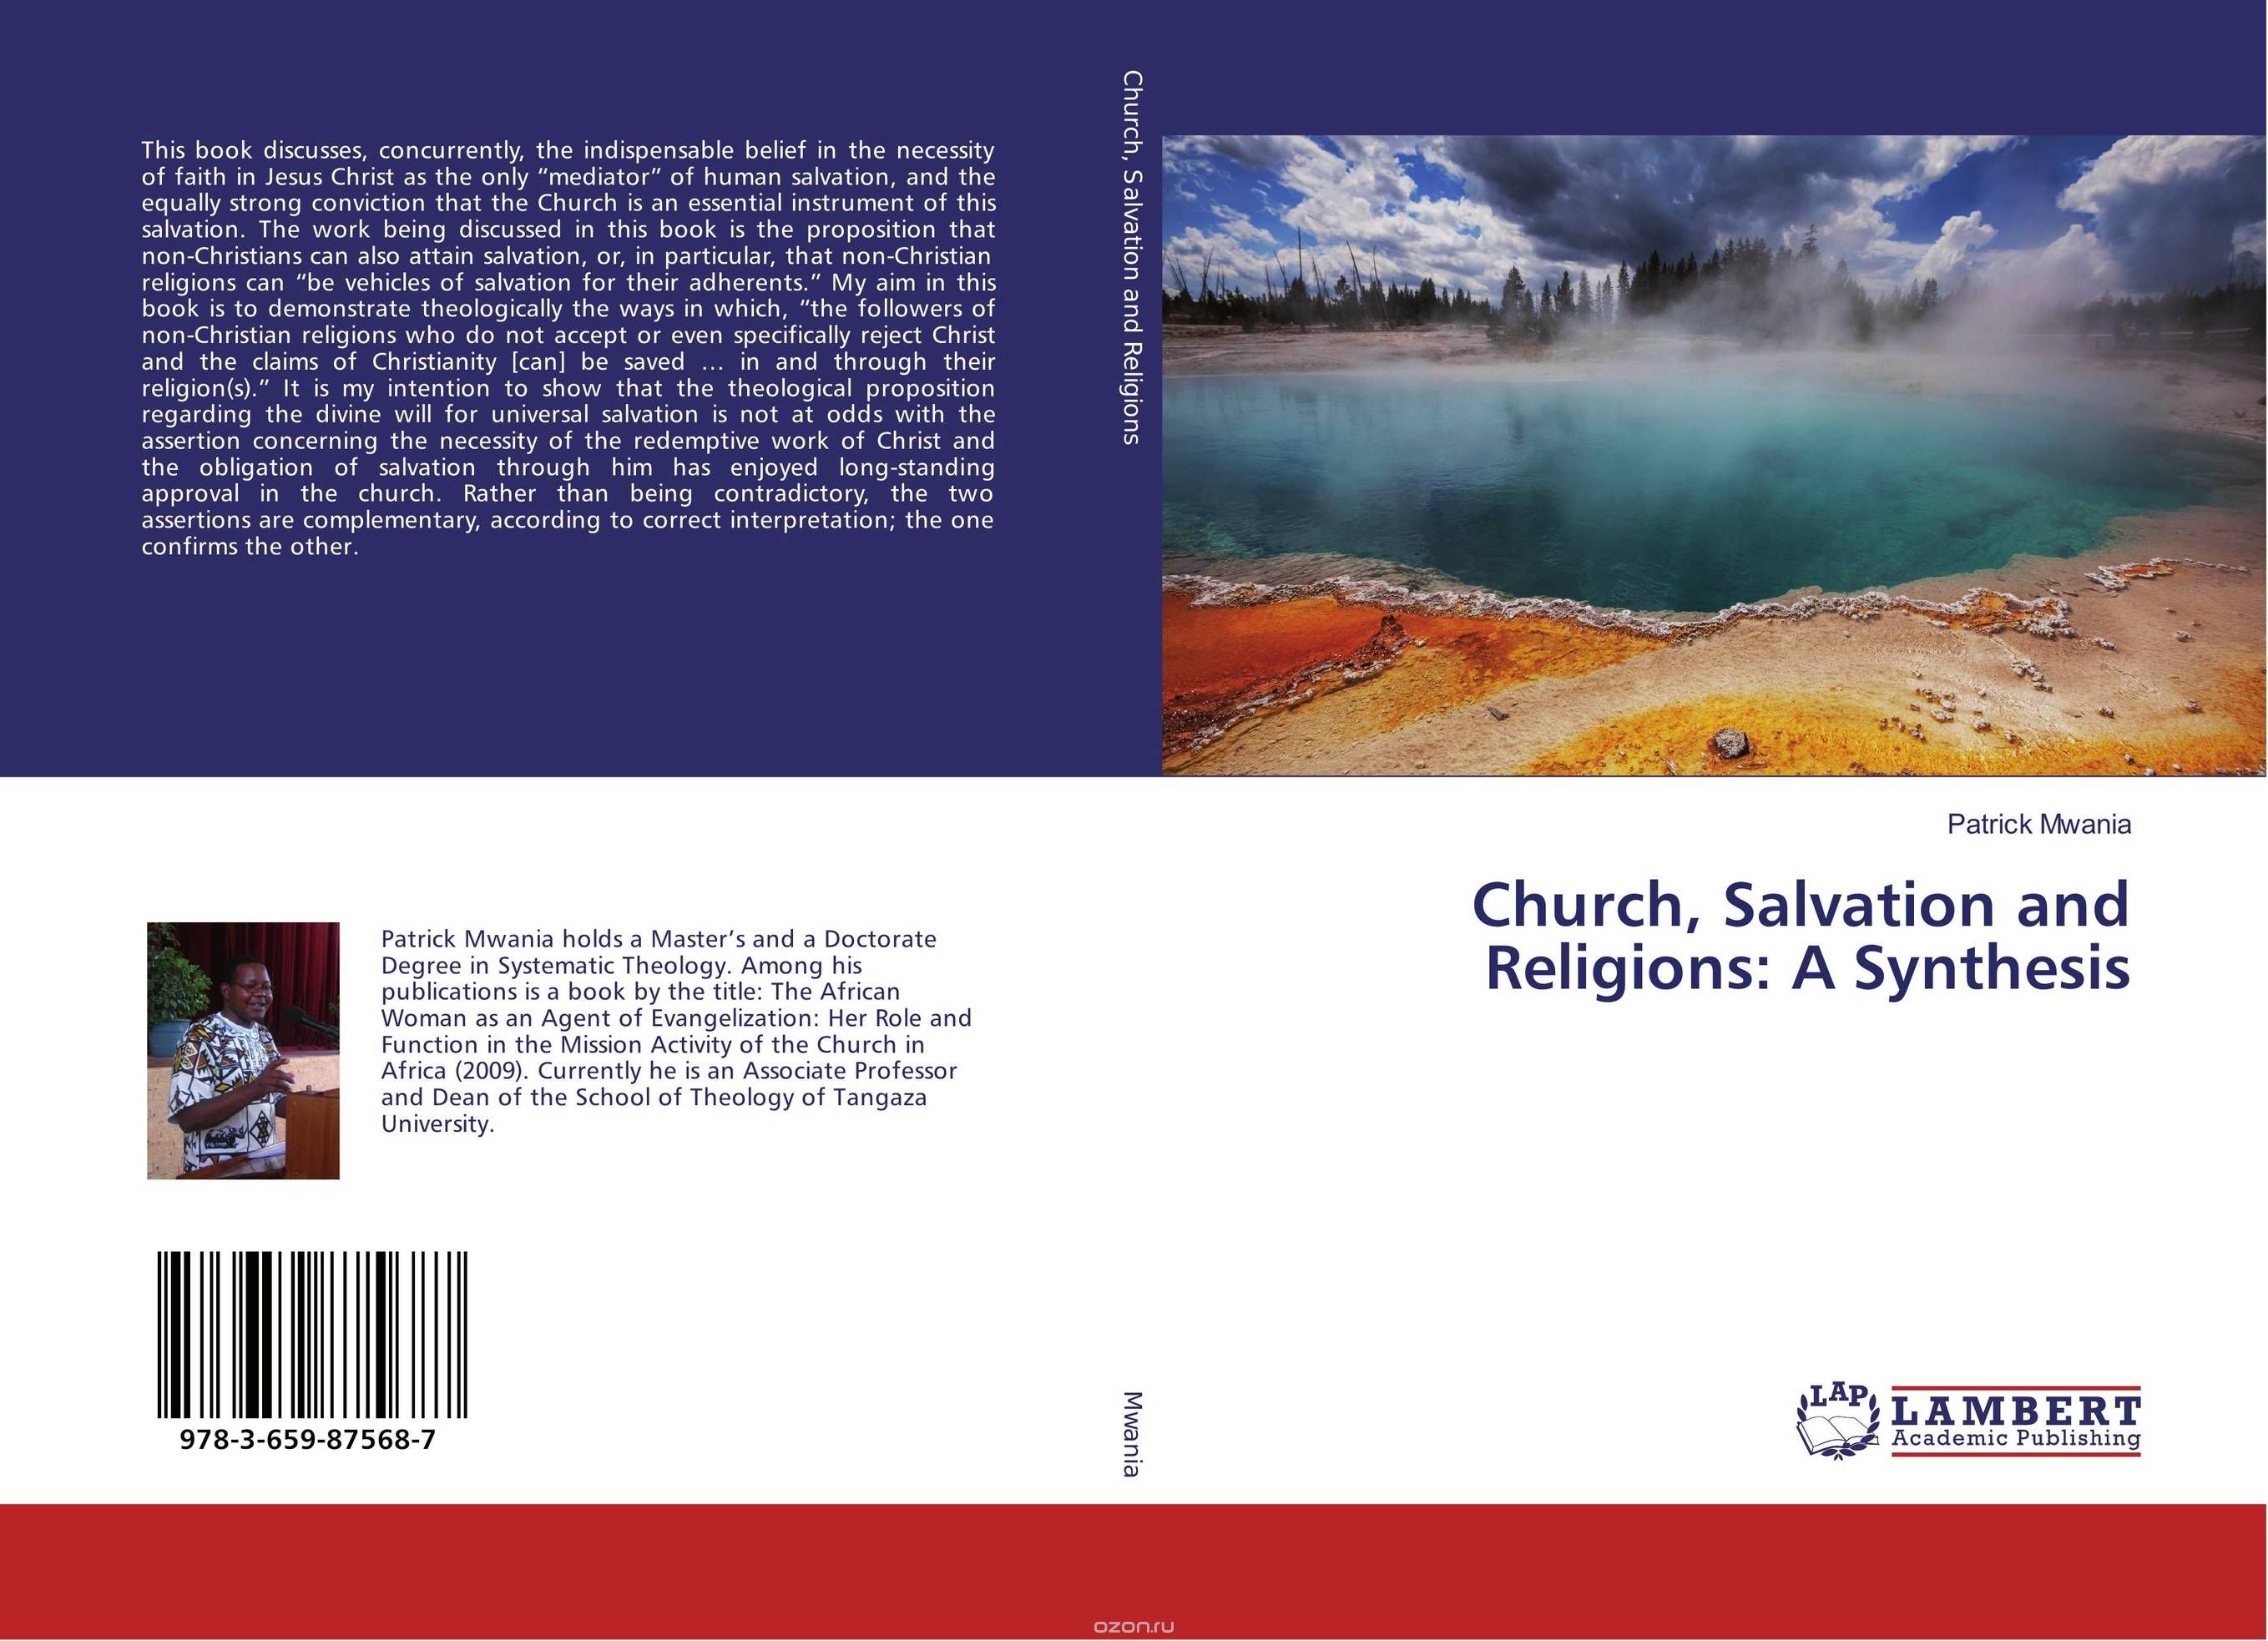 Скачать книгу "Church, Salvation and Religions: A Synthesis"